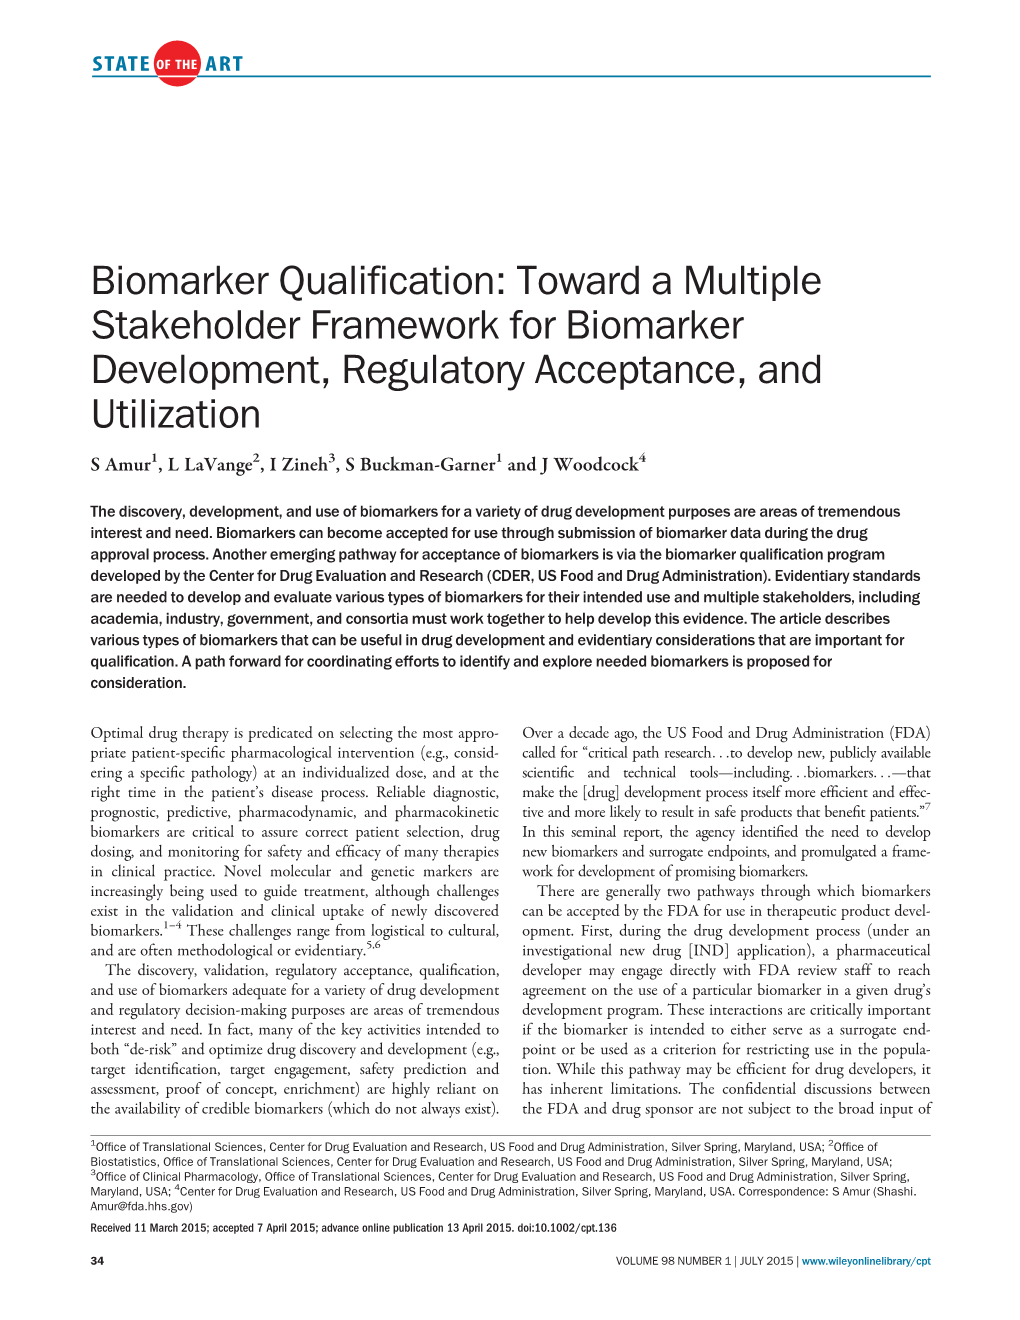 Biomarker Qualification: Toward a Multiple Stakeholder Framework for Biomarker Development, Regulatory Acceptance, and Utilization